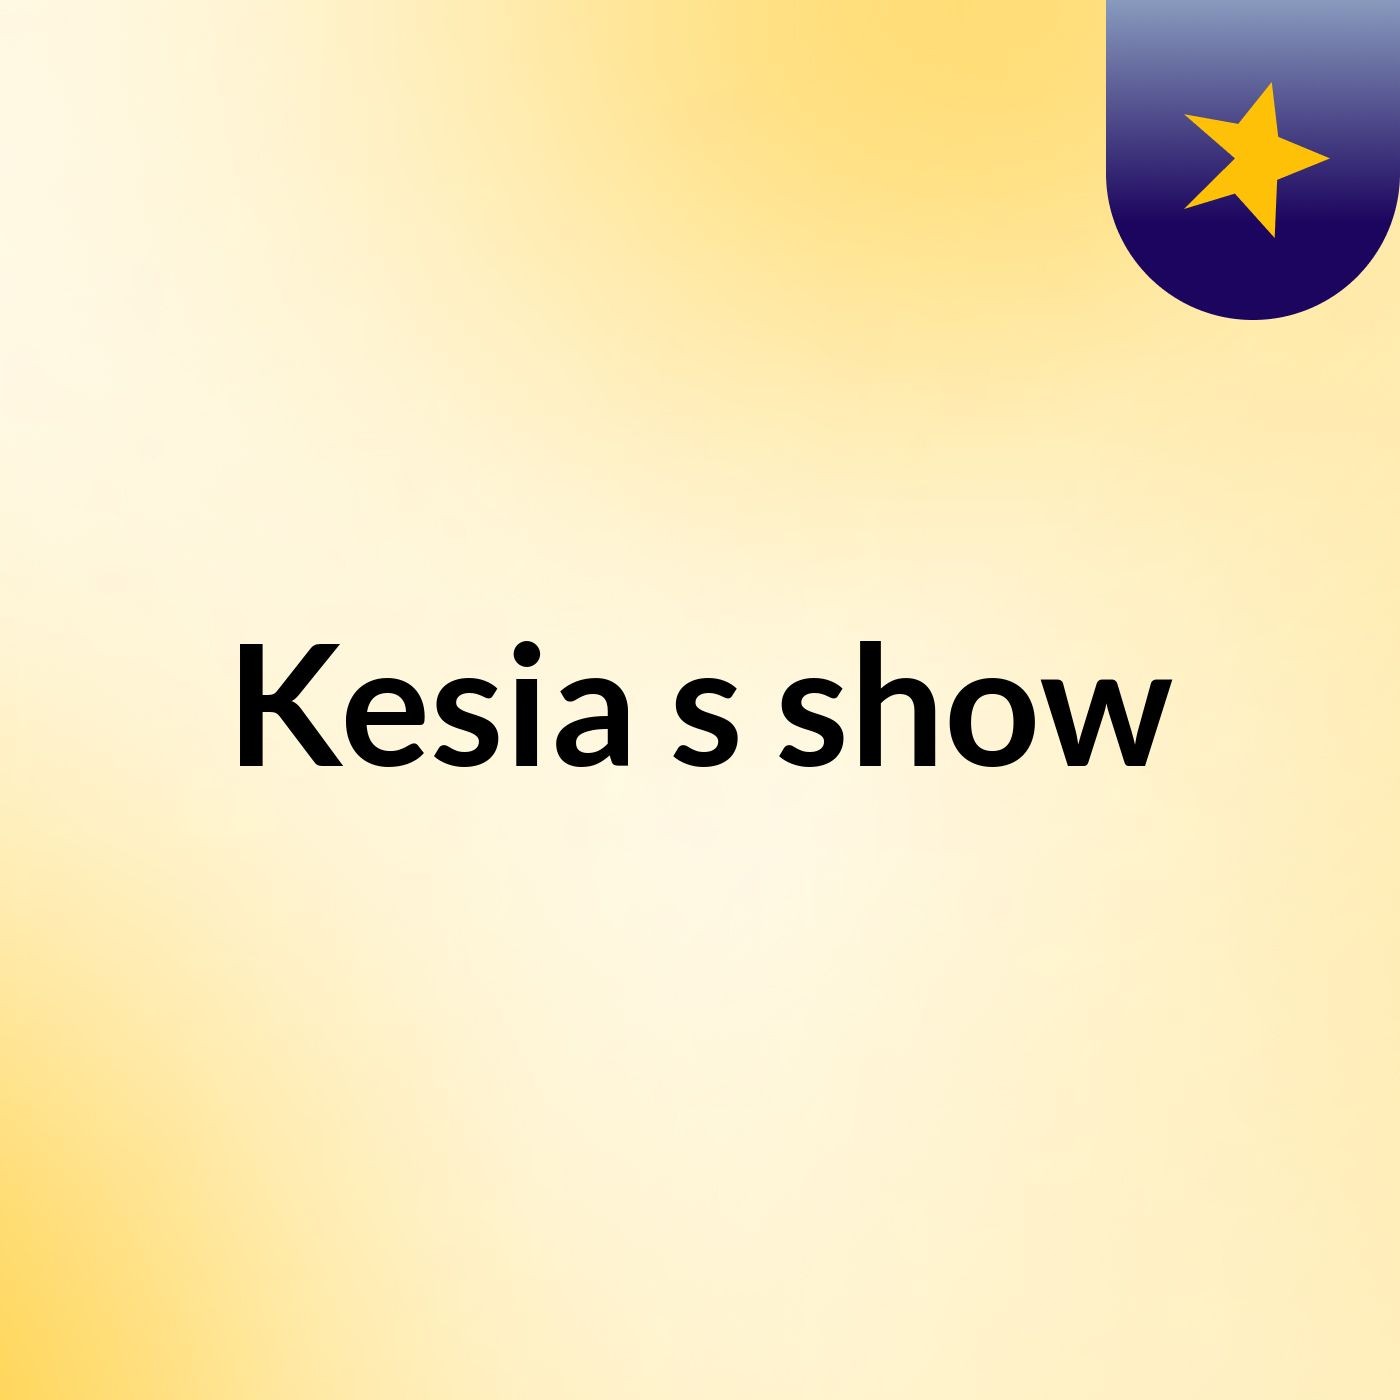 Kesia's show